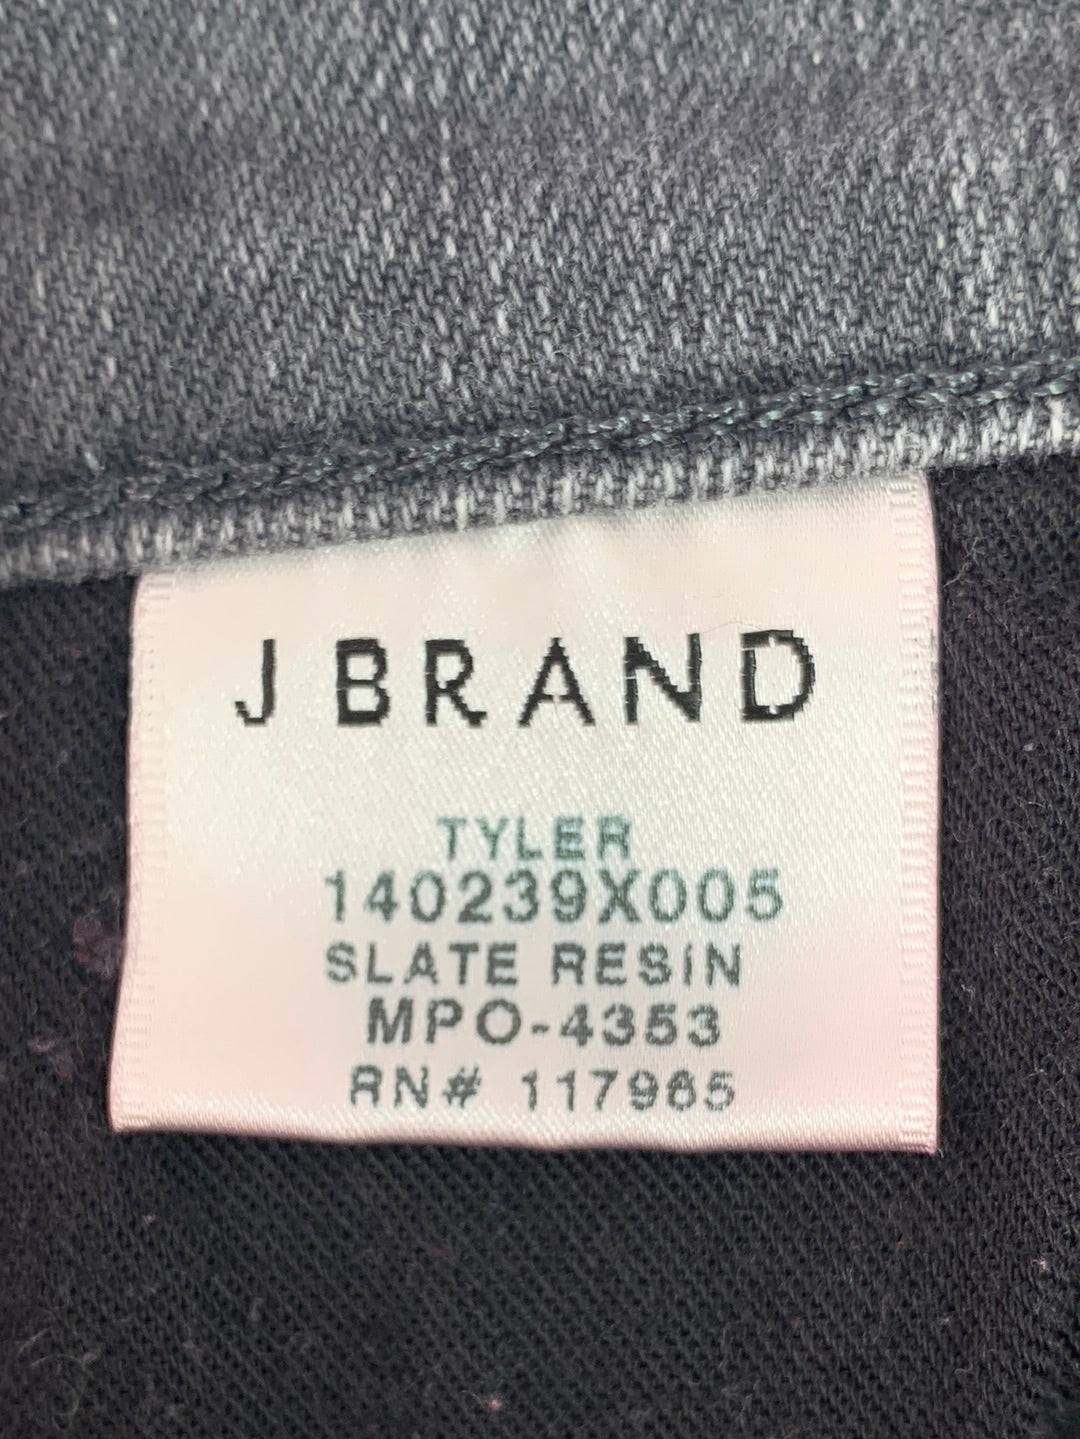 J BRAND slate resin gray Tyler Slim Fit Denim Jeans - Men's 33